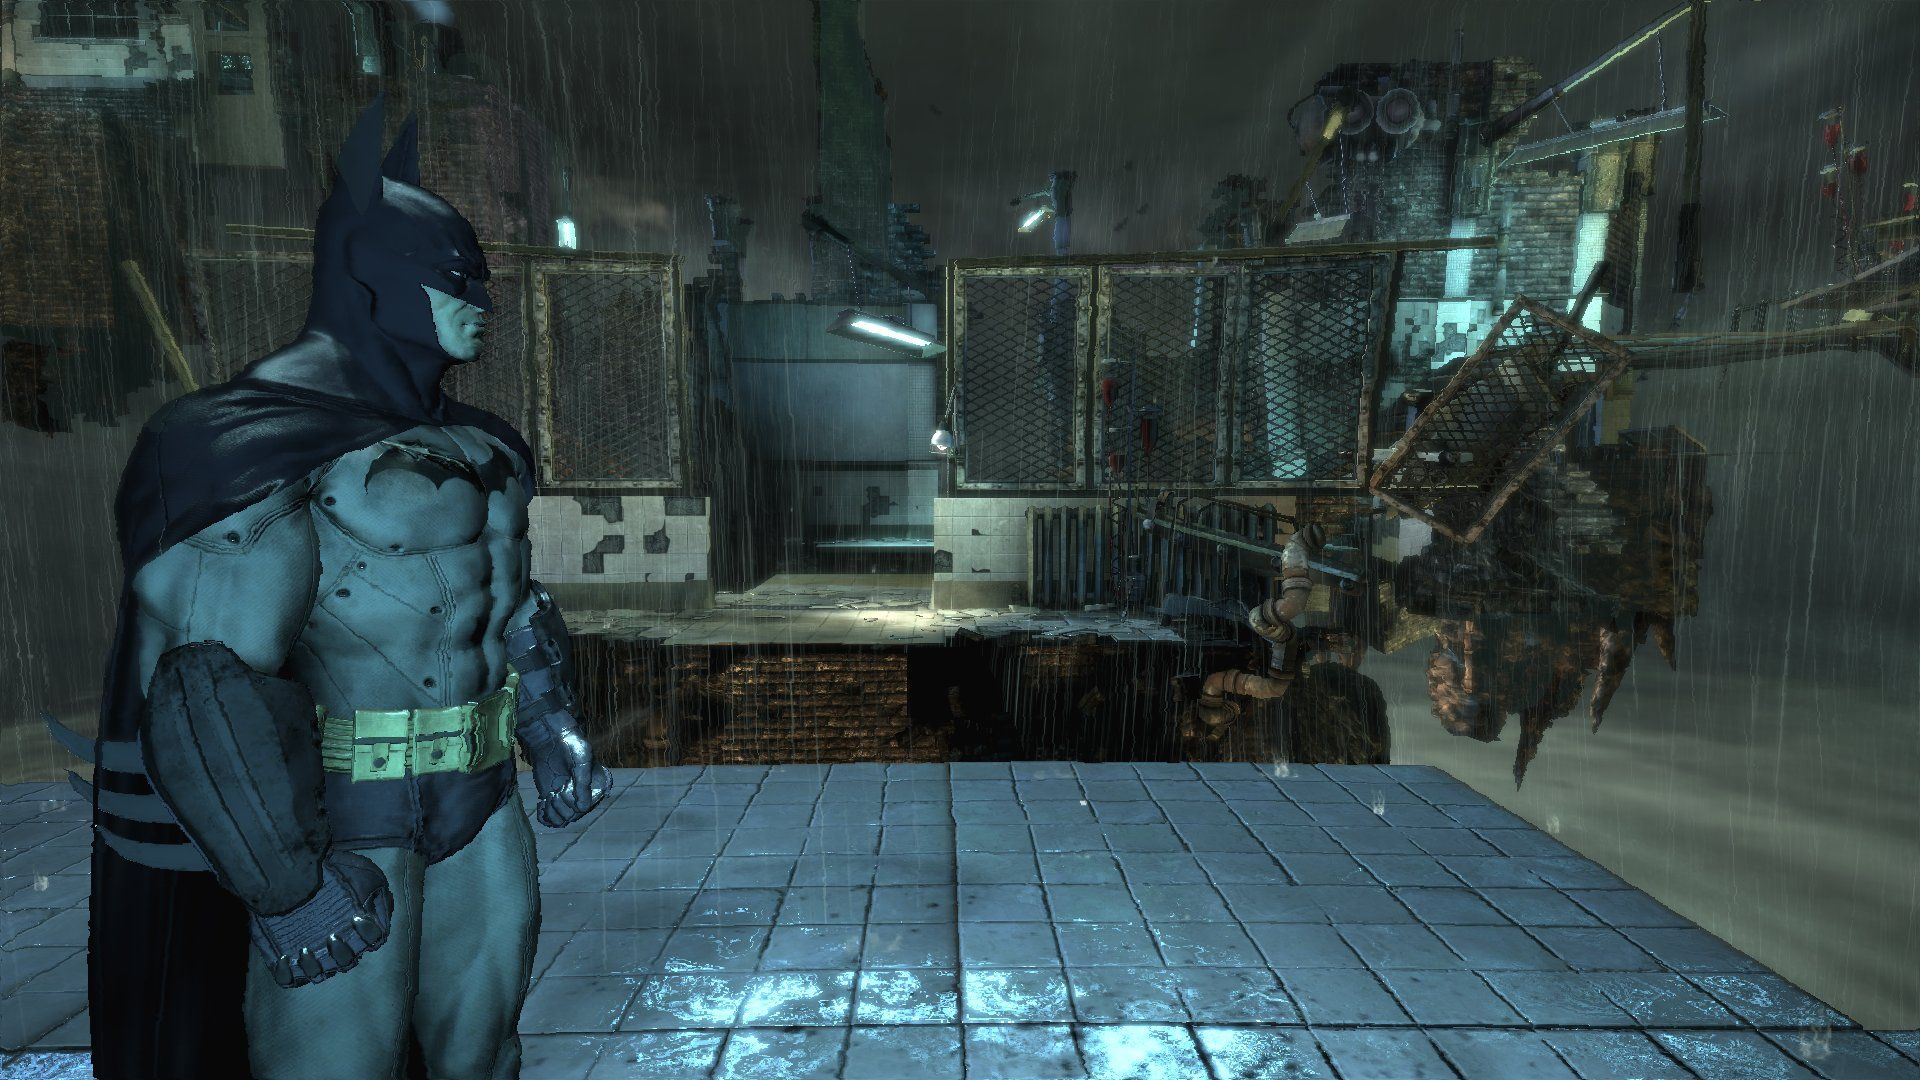 Batman 2009. Бэтмен Аркхем асилум. Batman Arkham Asylum скрины. Batman Arkham Asylum screenshots. Бэтмен аркхам асайлум.